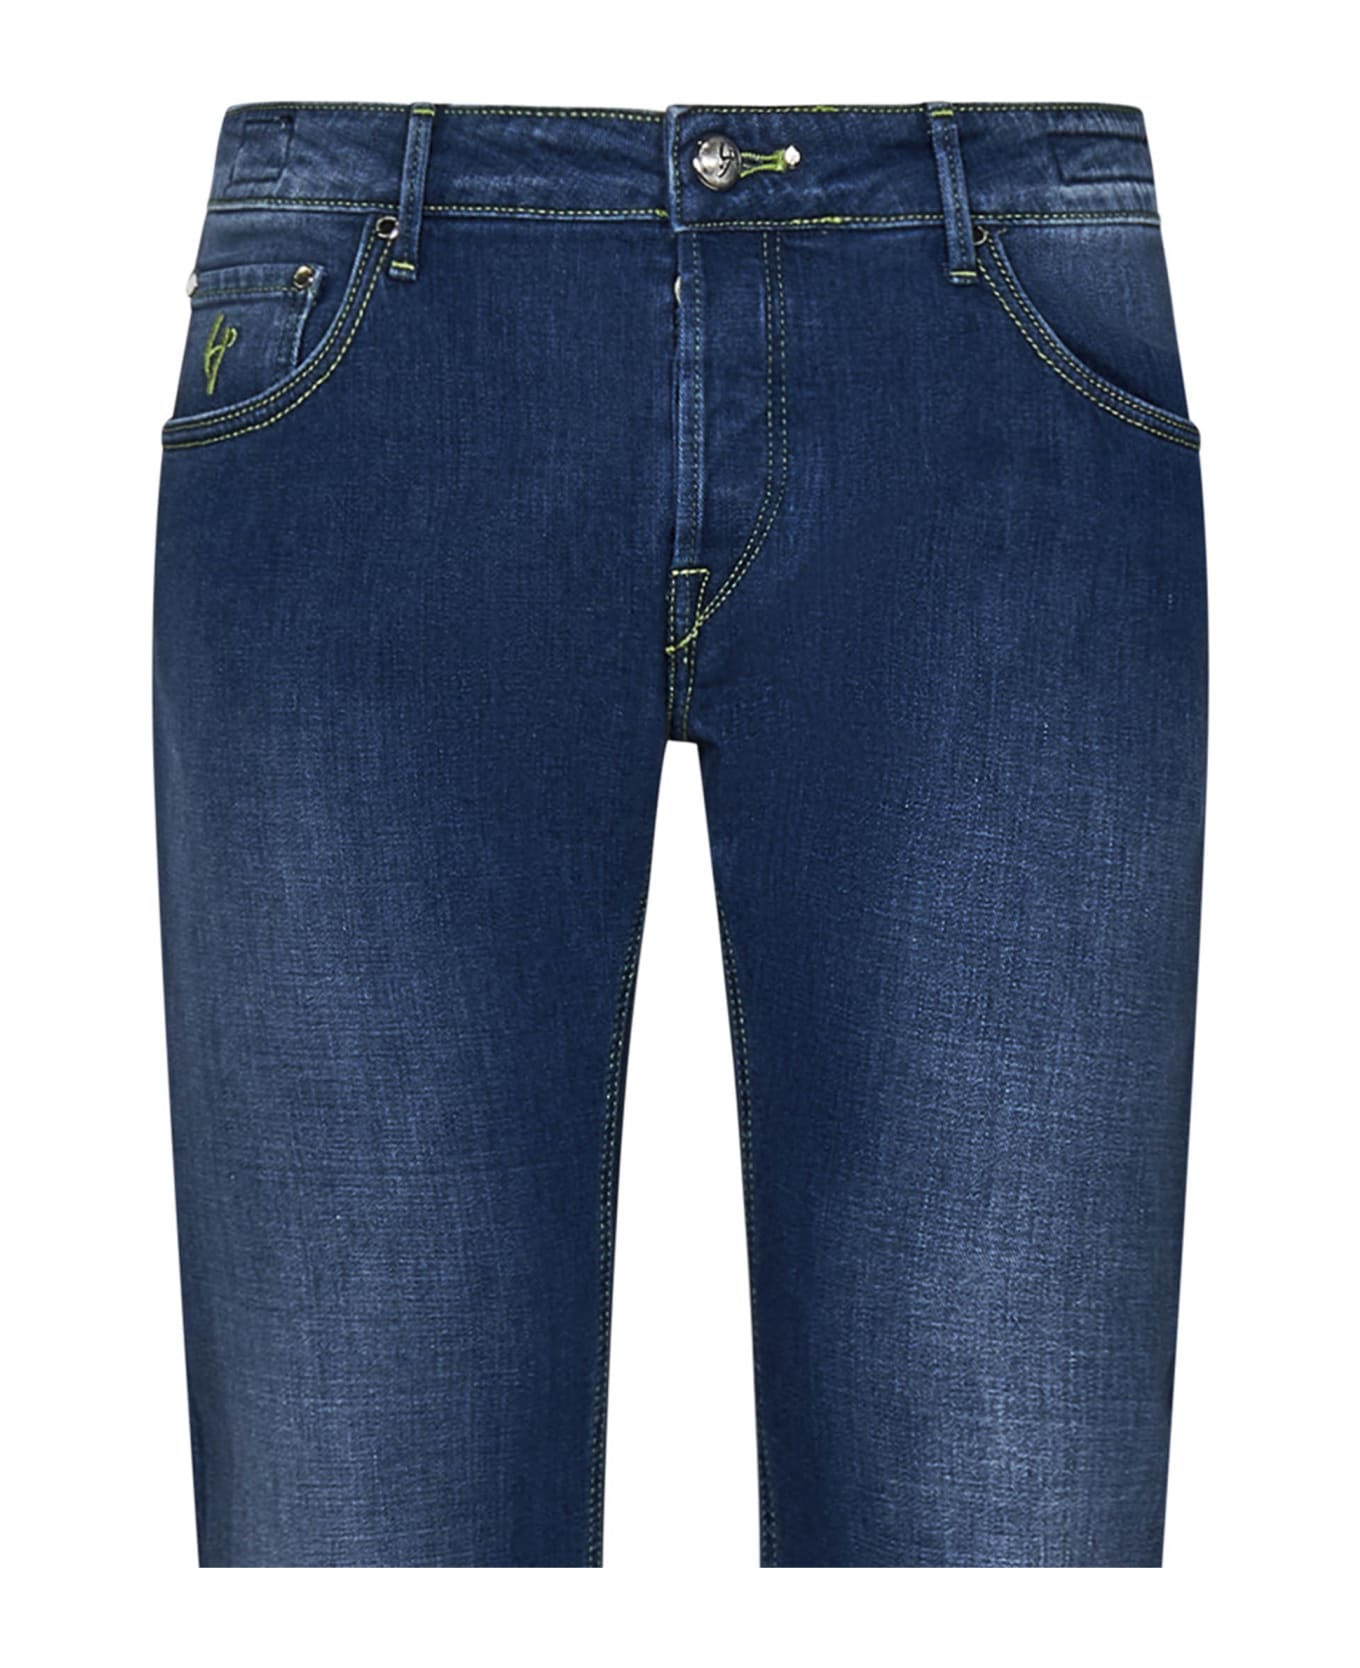 Hand Picked Handpicked Orvieto Jeans - Blue デニム